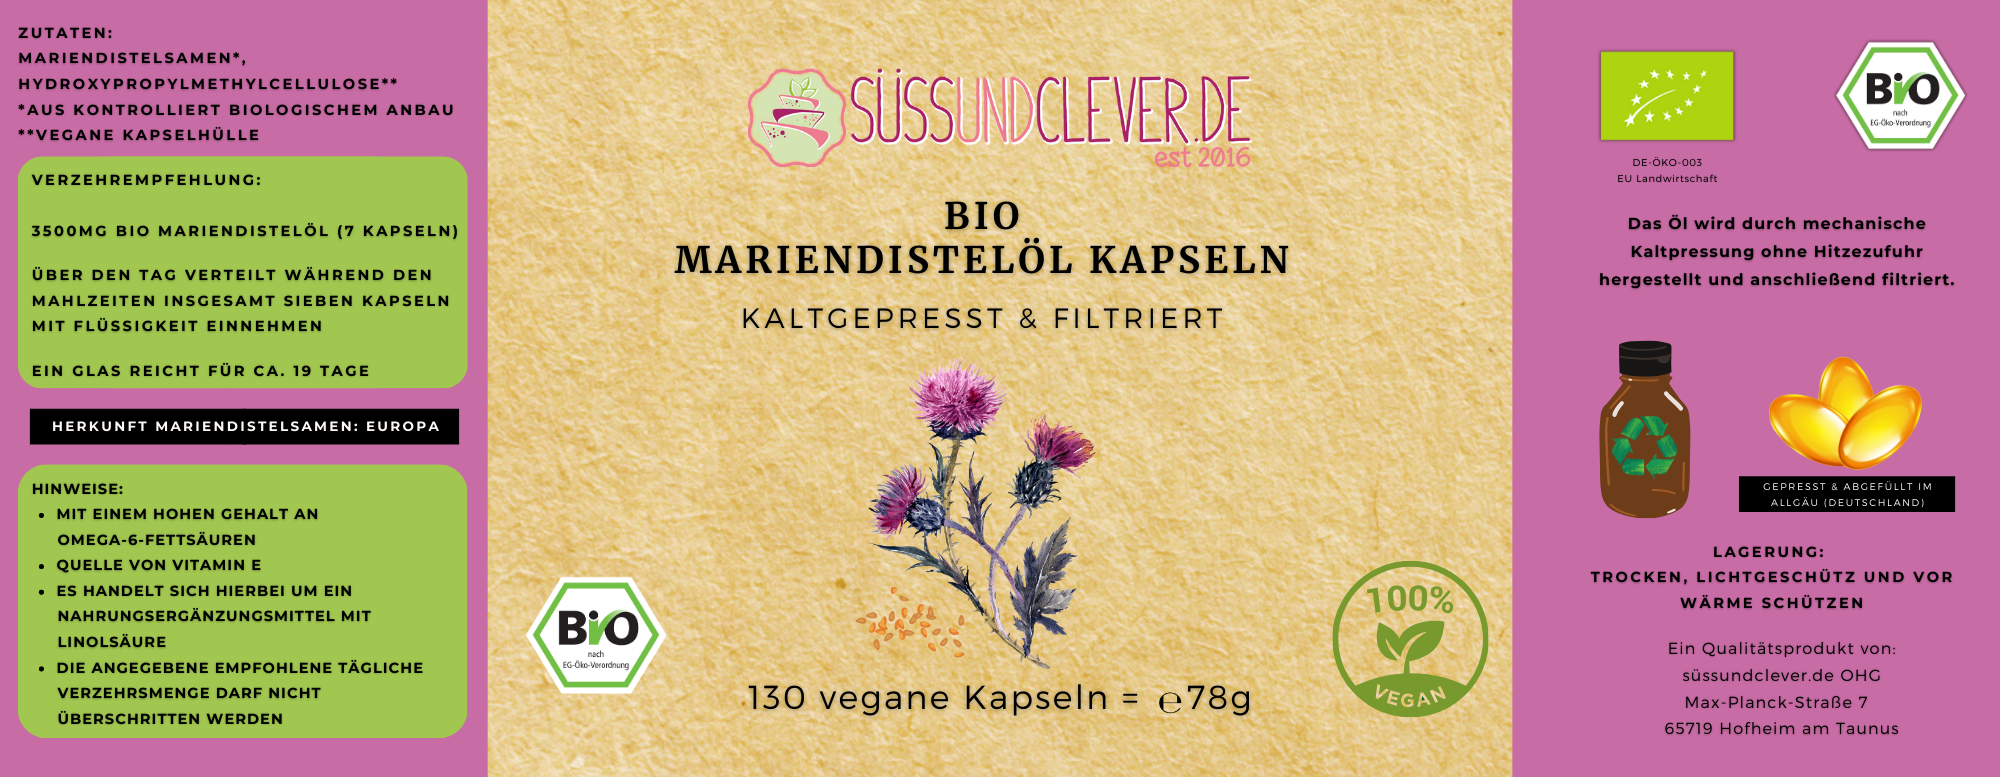 Bio Mariendistelöl Kapseln | kaltgepresst | vegan | 130 vegane Kapseln